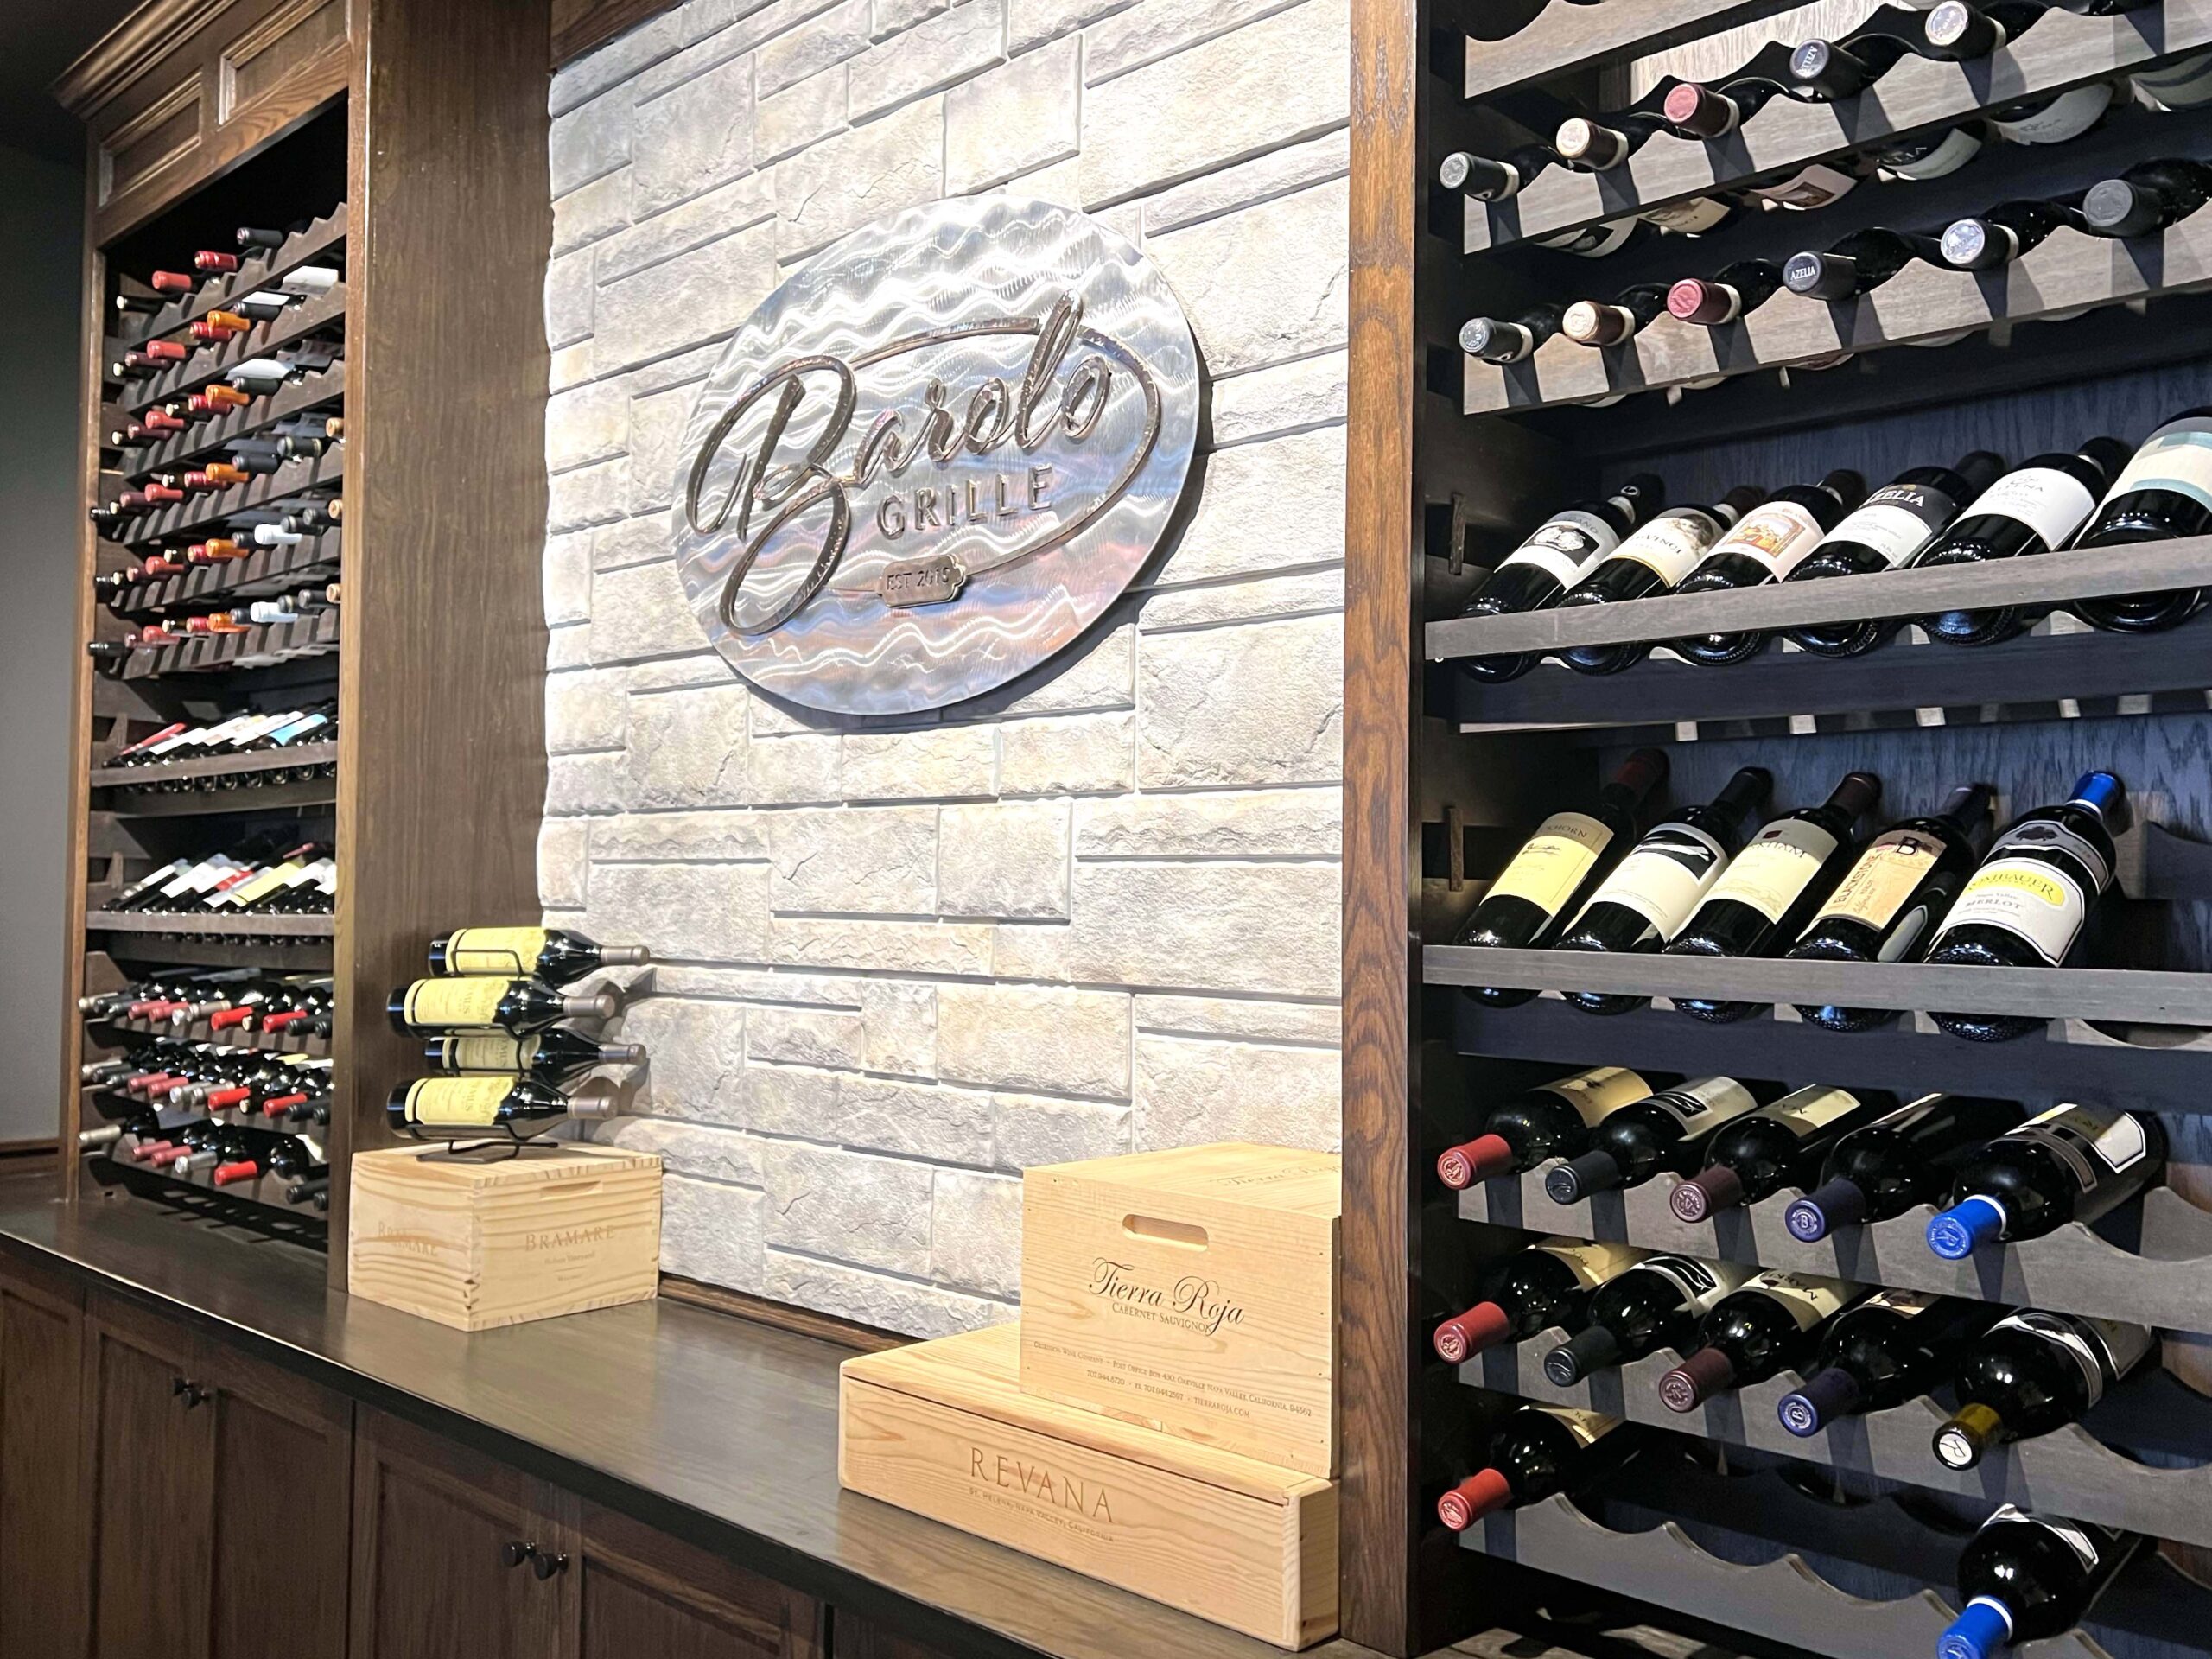 Barolo Grille Wine Wall